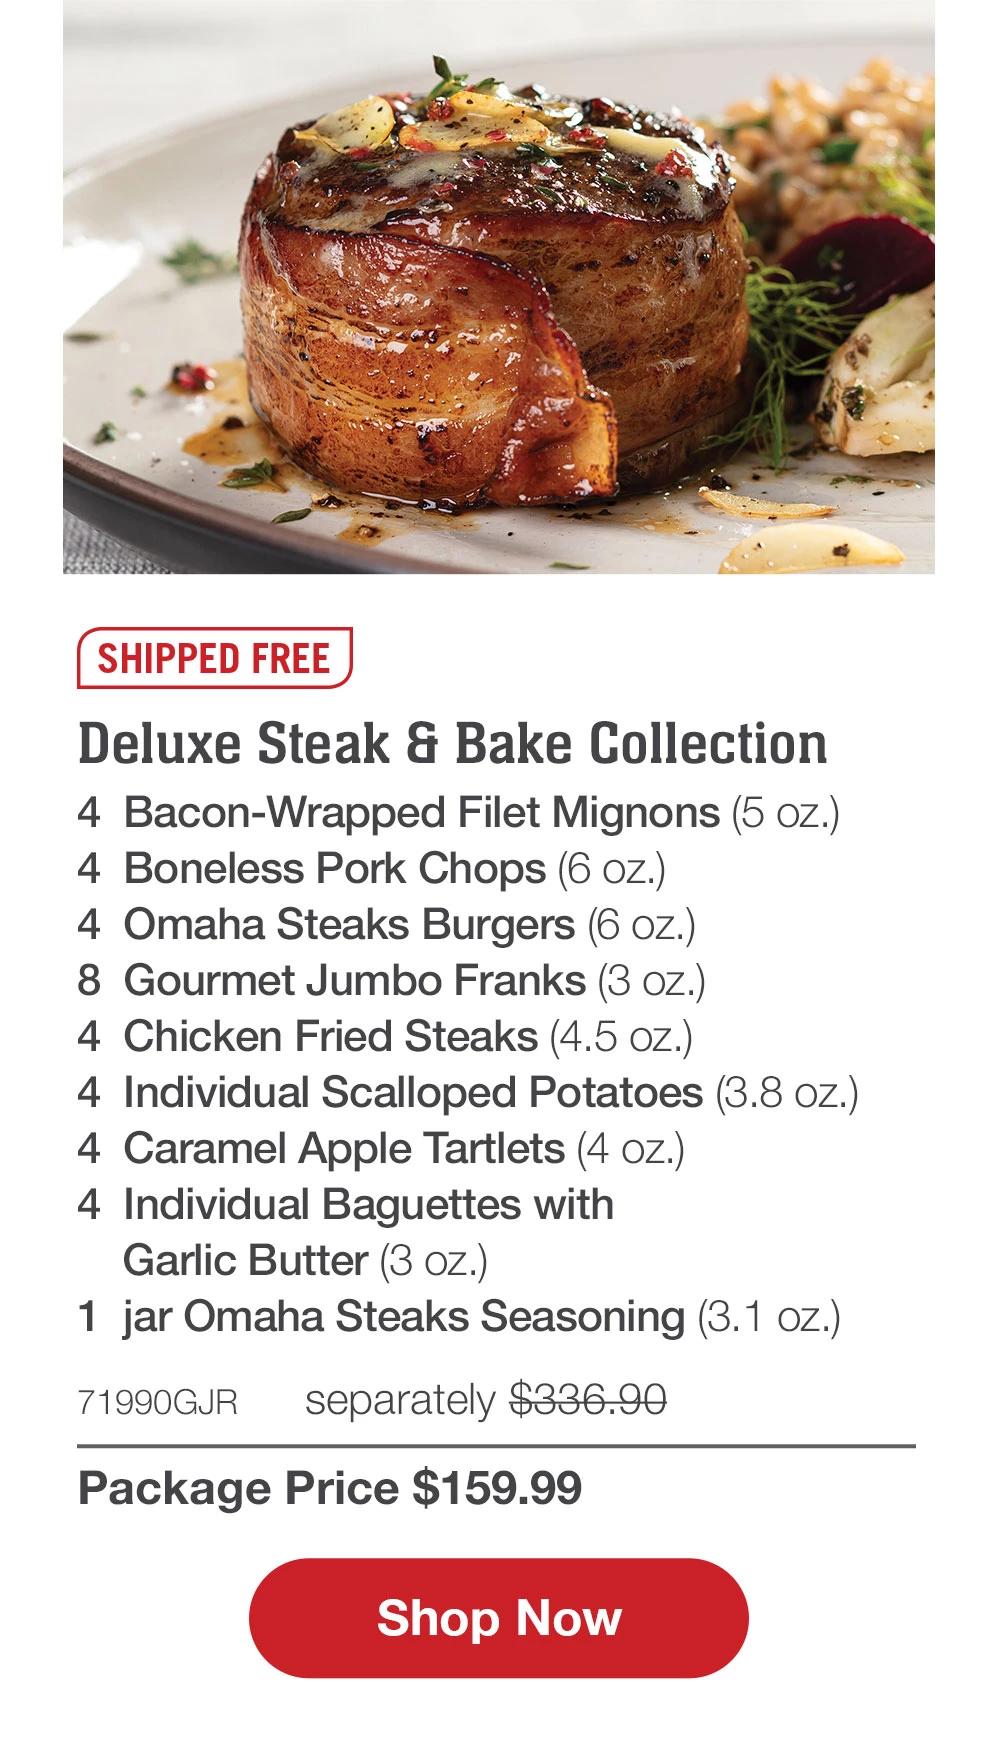 SHIPPED FREE | Deluxe Steak & Bake Collection - 4 Bacon-Wrapped Filet Mignons (5 oz.) - 4 Boneless Pork Chops (6 oz.) - 4 Omaha Steaks Burgers (6 oz.) - 8 Gourmet Jumbo Franks (3 oz.) - 4 Chicken Fried Steaks (4.5 oz.) - 4 Individual Scalloped Potatoes (3.8 oz.) - 4 Caramel Apple Tartlets (4 oz.) - 4 Individual Baguettes with Garlic Butter (3 oz.) - 1 jar Omaha Steaks Seasoning (3.1 oz.) - 71990GJR separately $336.90 | Package Price $159.99 || Shop Now